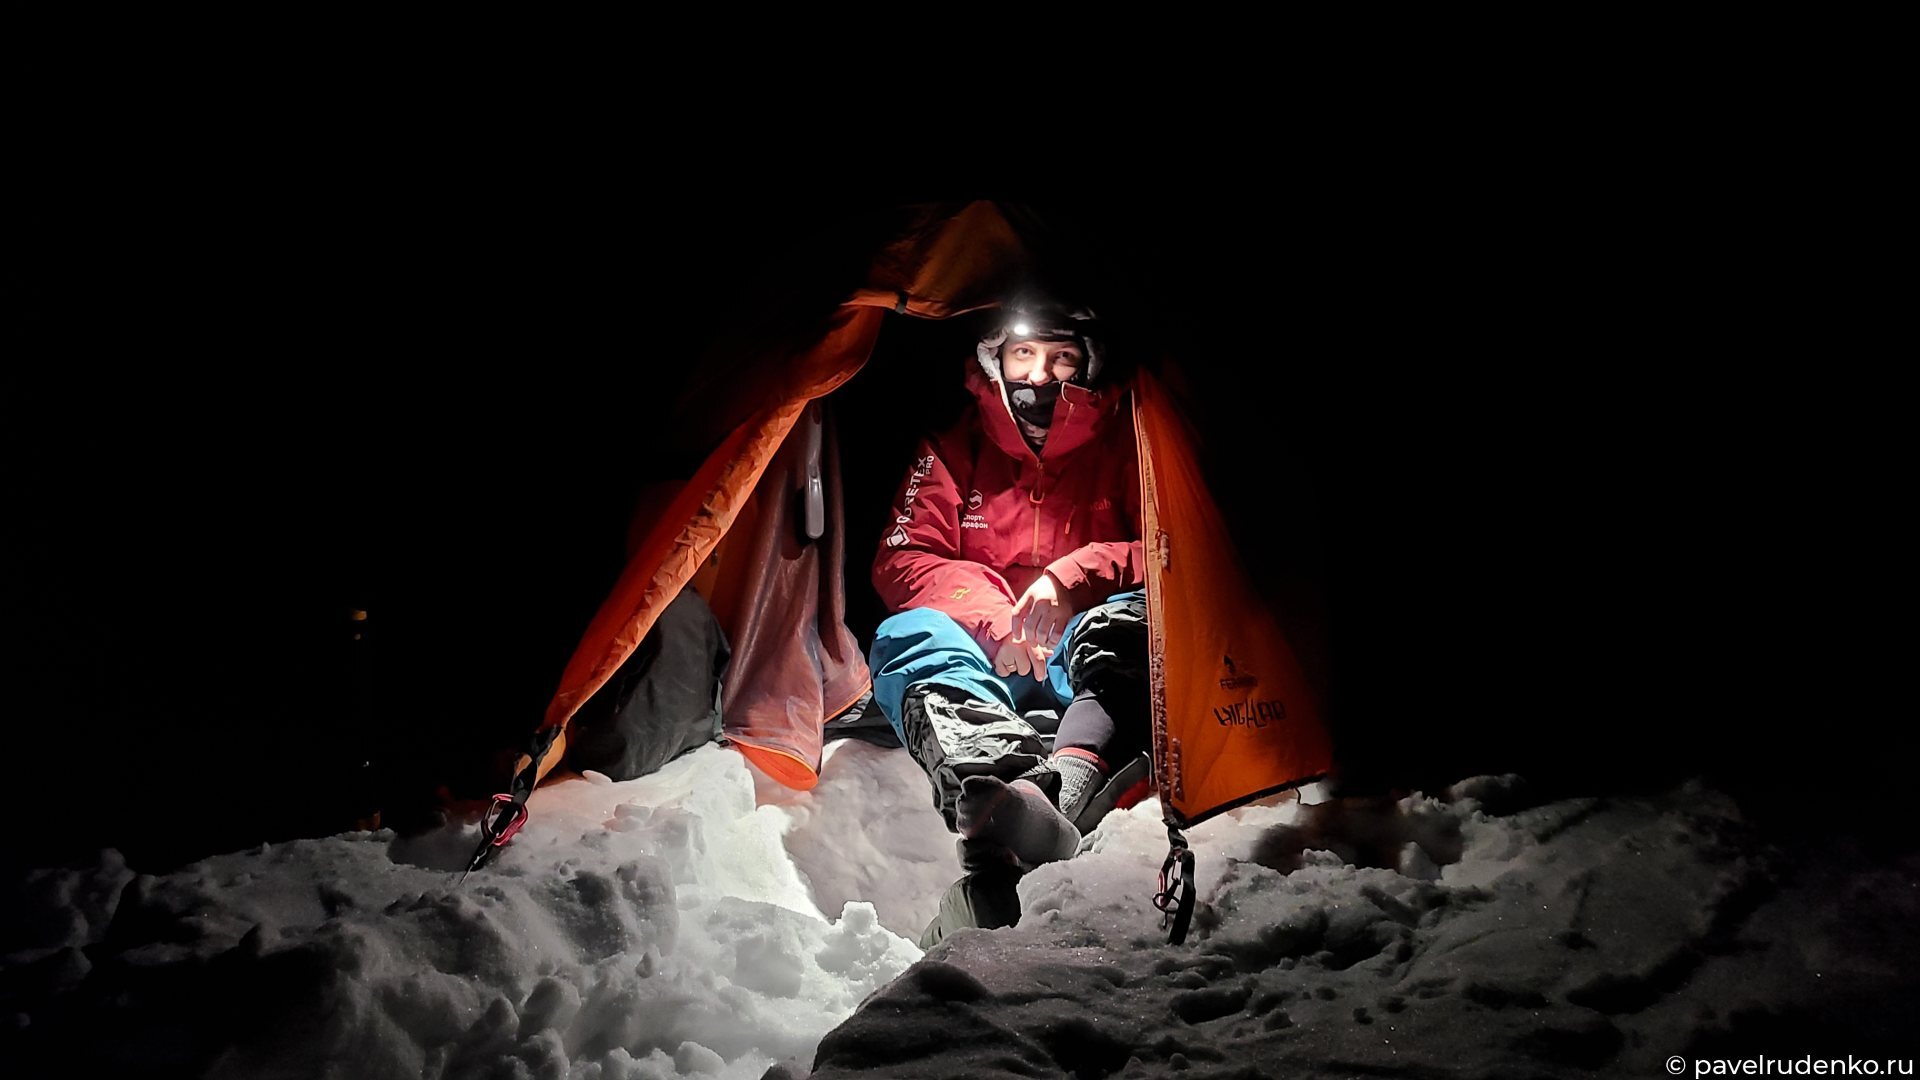 Фотография Ferrino Piller зимний поход, тамбур палатки